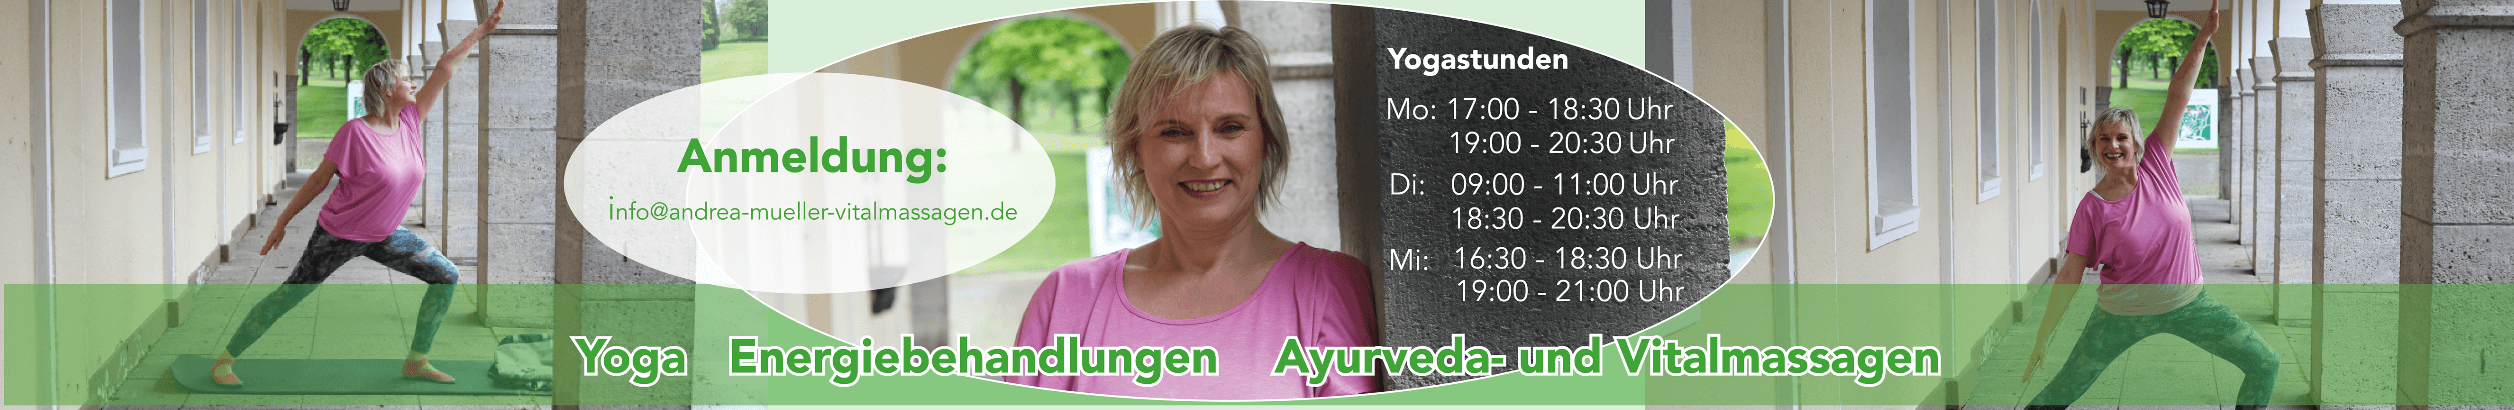 Andrea Müller - Yogastunden Anmeldung